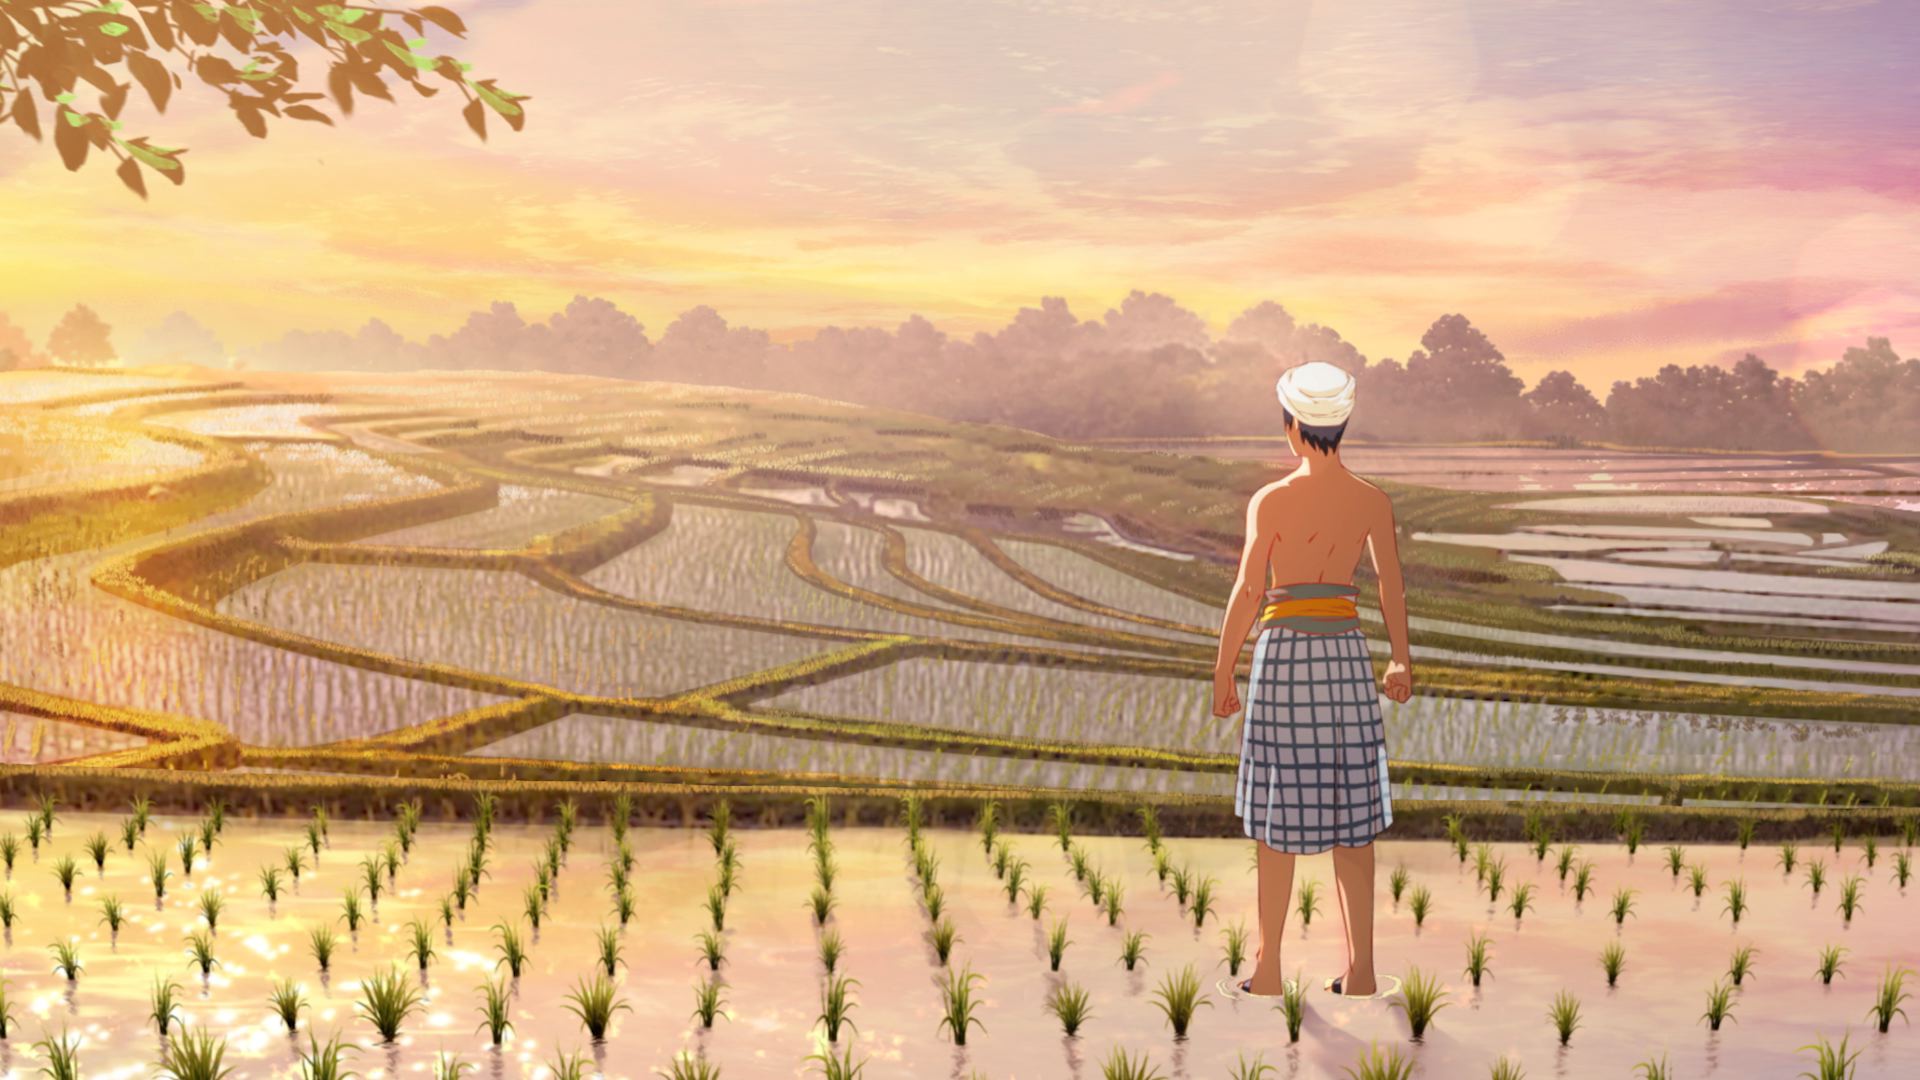 Anime boy in rice paddies